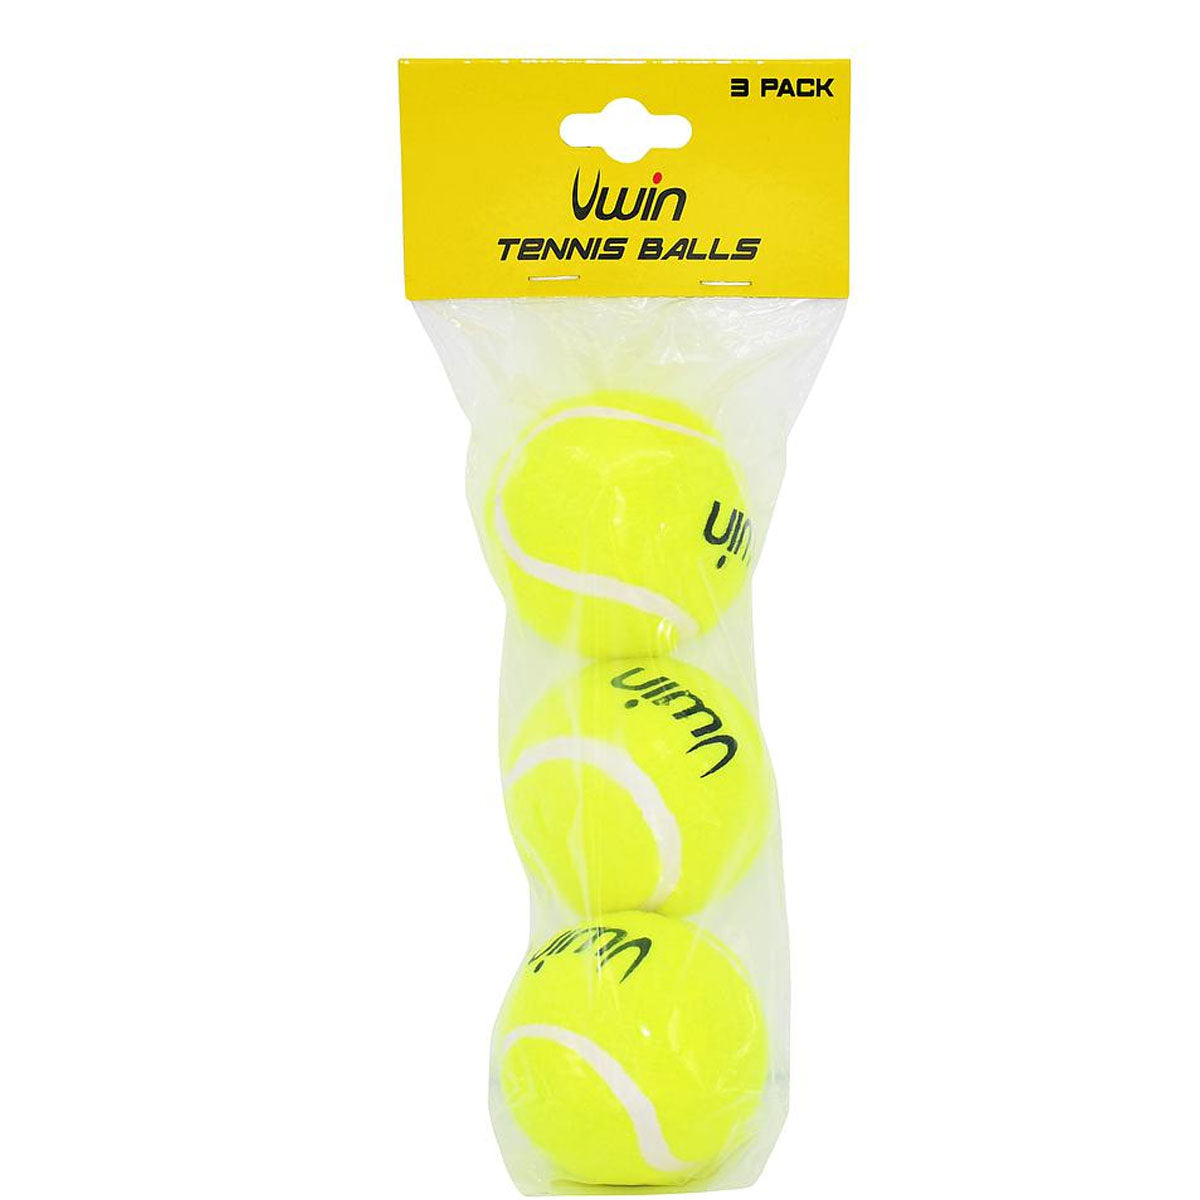 Uwin Trainer Tennis Balls - Pack of 3